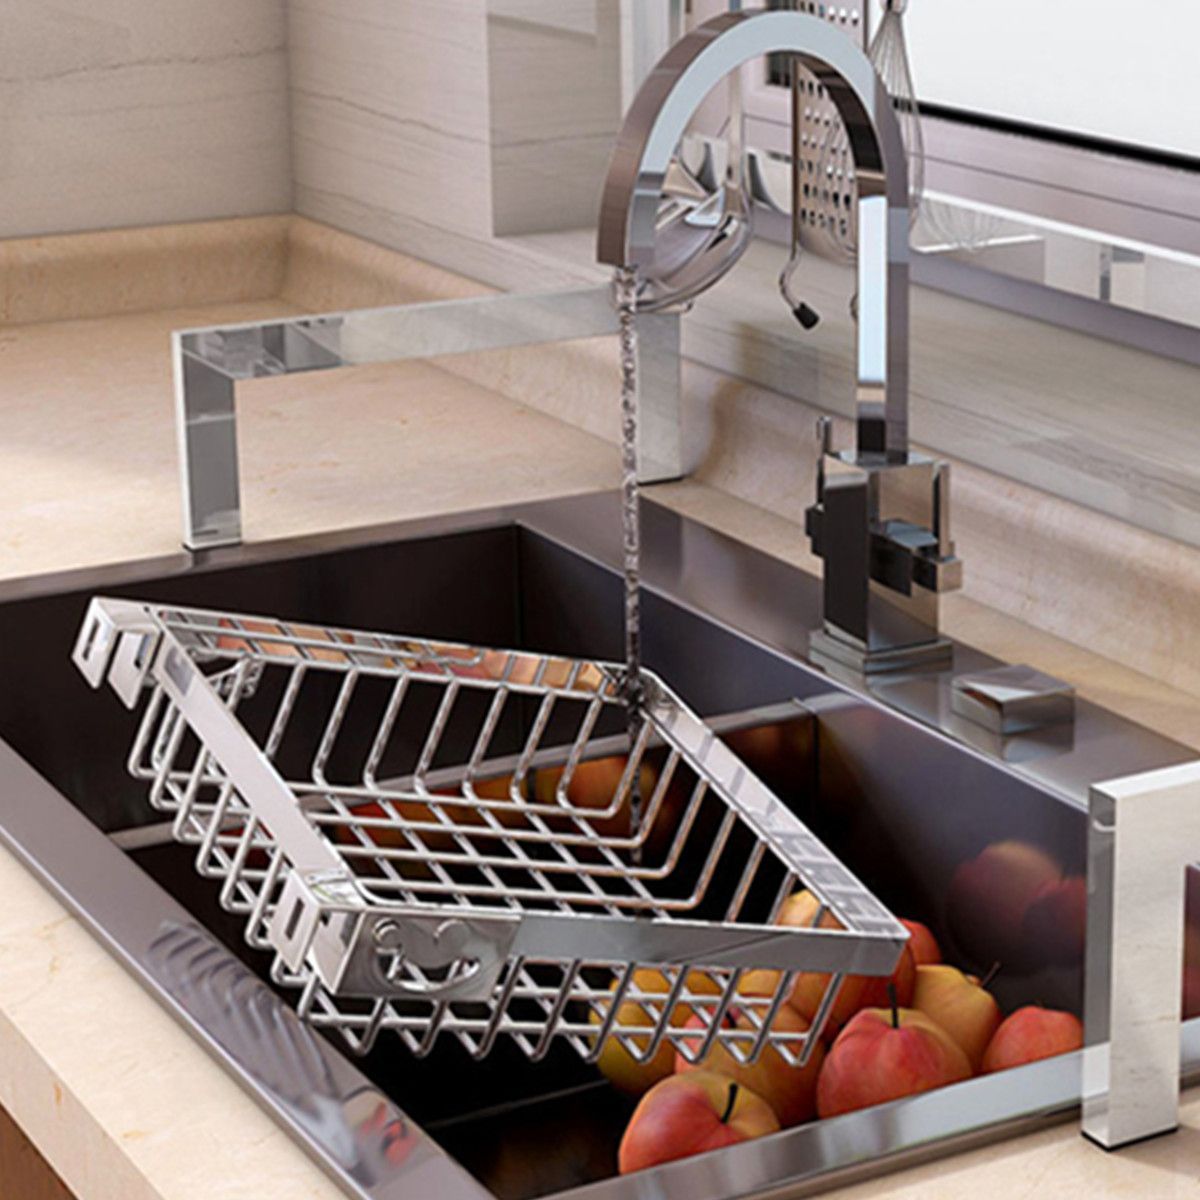 83cm-Shelf-Stainless-Steel-Drain-Rack-Shelf-Square-Basket-for-Fruit-Dish-Bowl-in-Kitchen-1552980